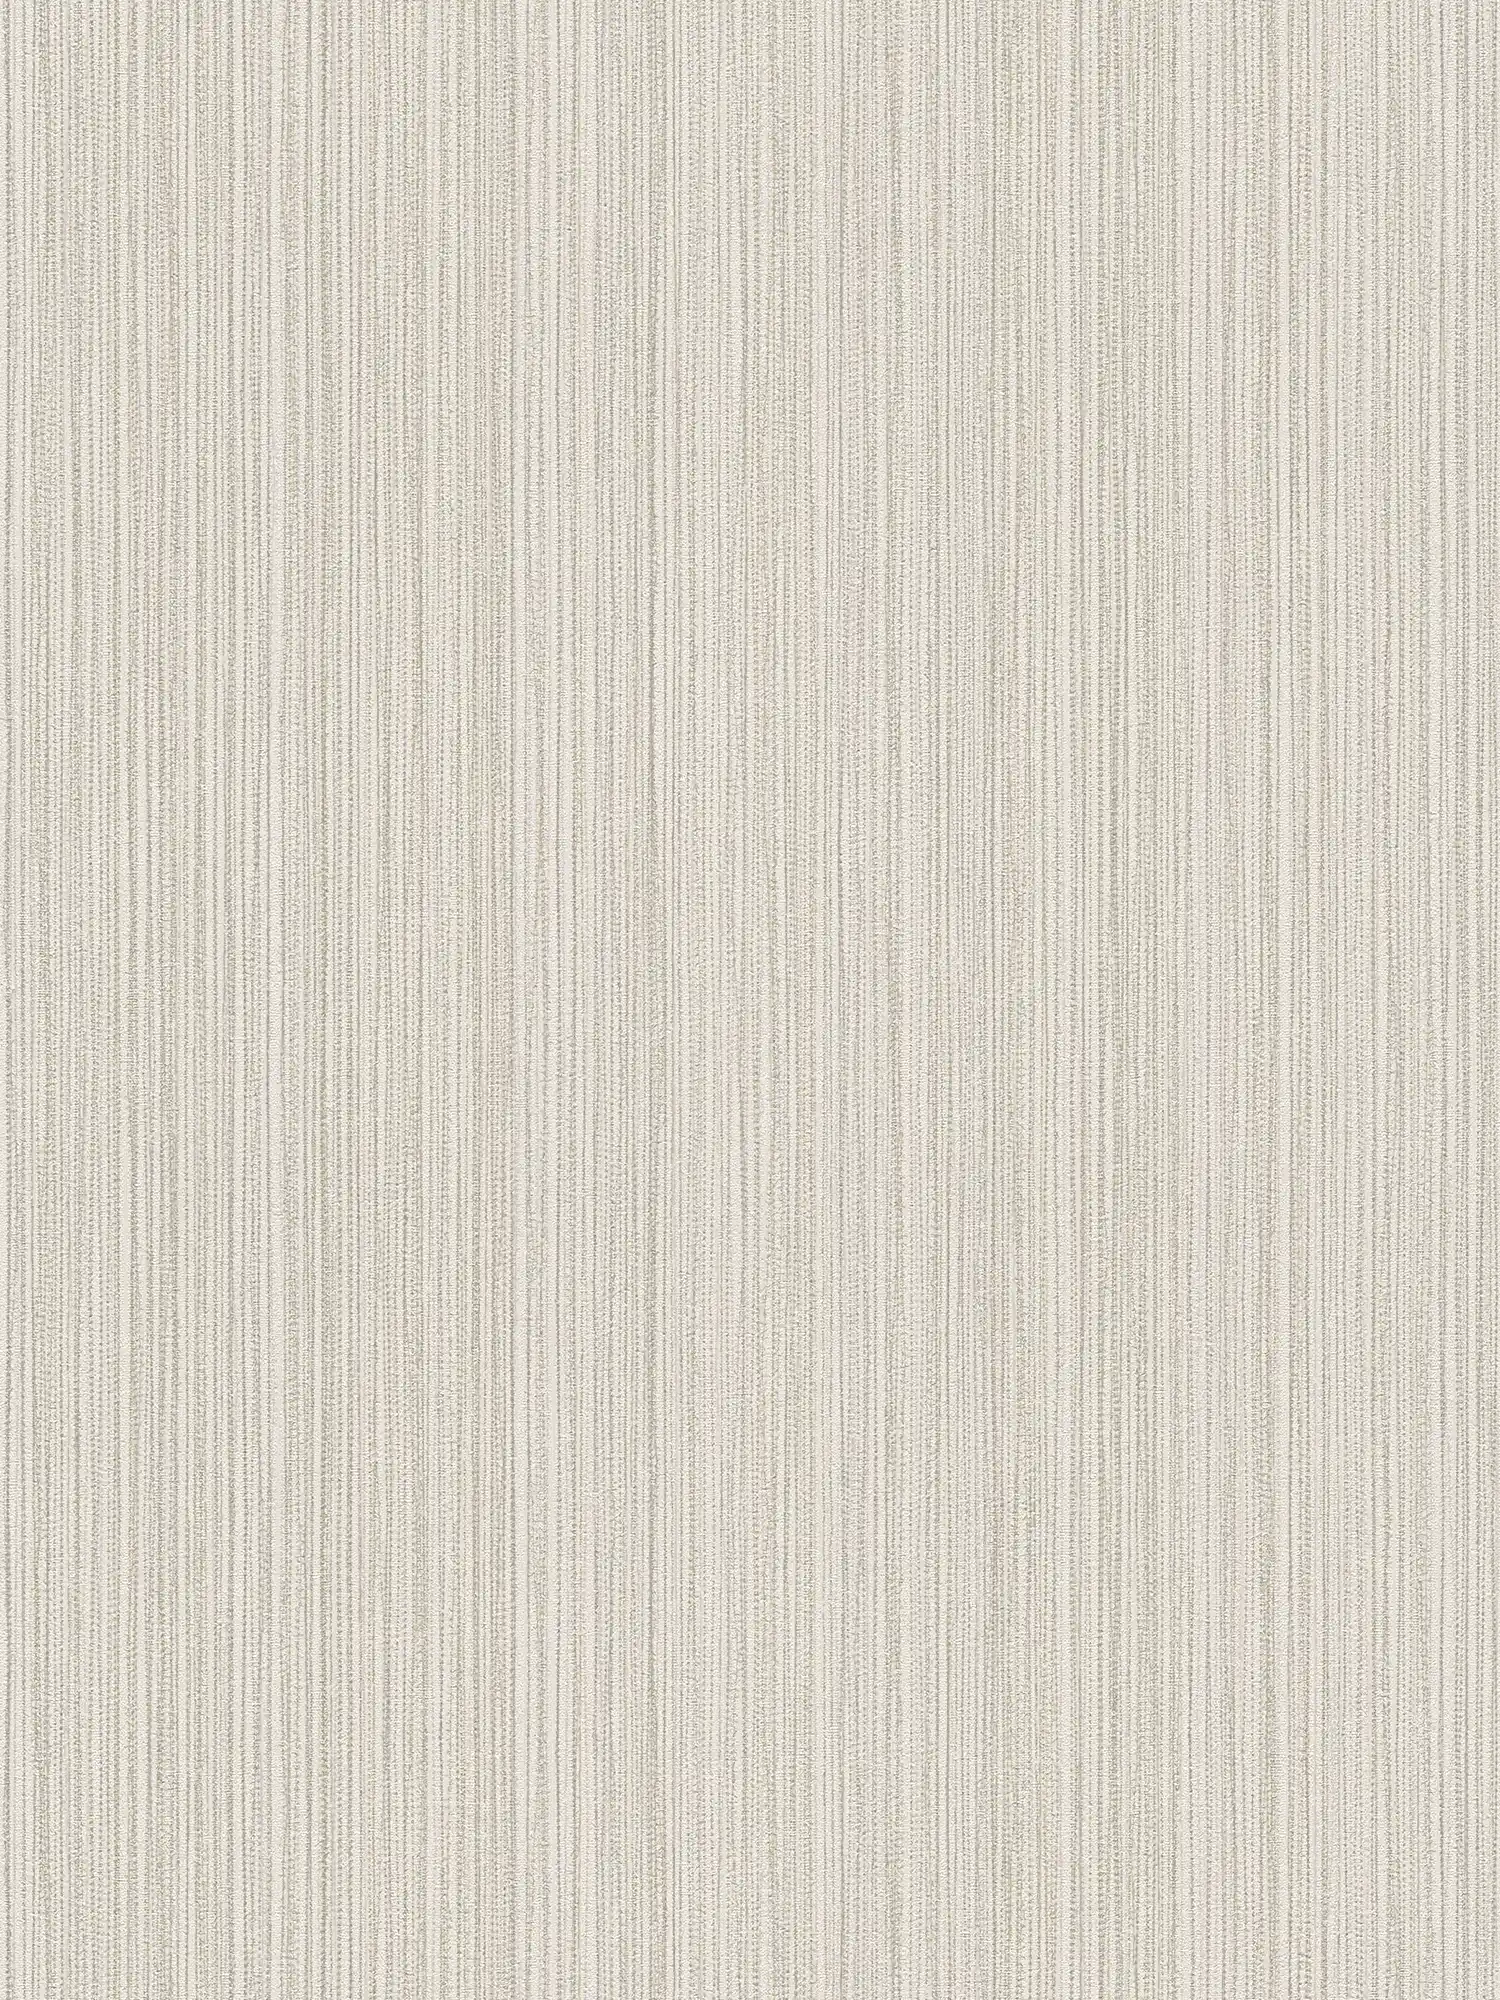 Plain wallpaper light grey with fine line pattern
